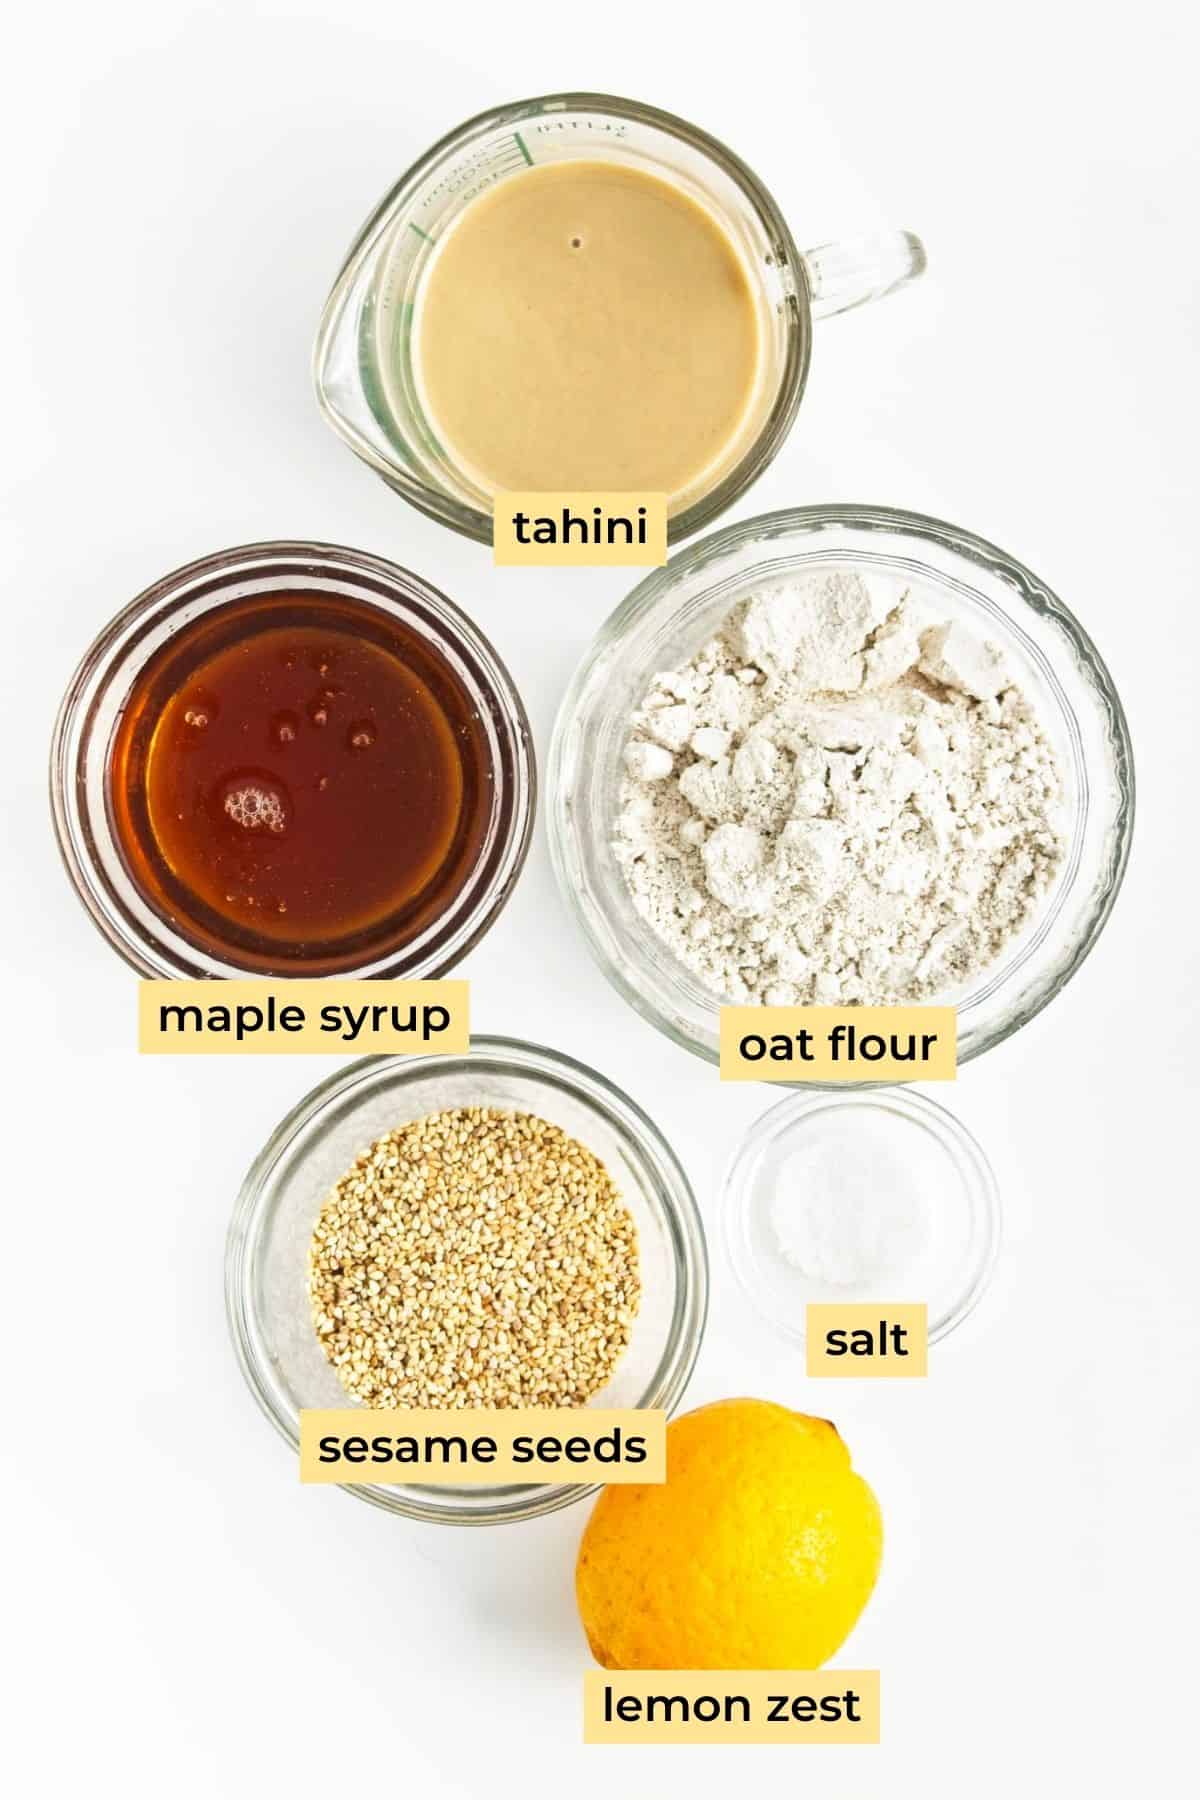 Ingredients: tahini, maple syrup, oat flour, sesame seeds, salt and lemon zest.